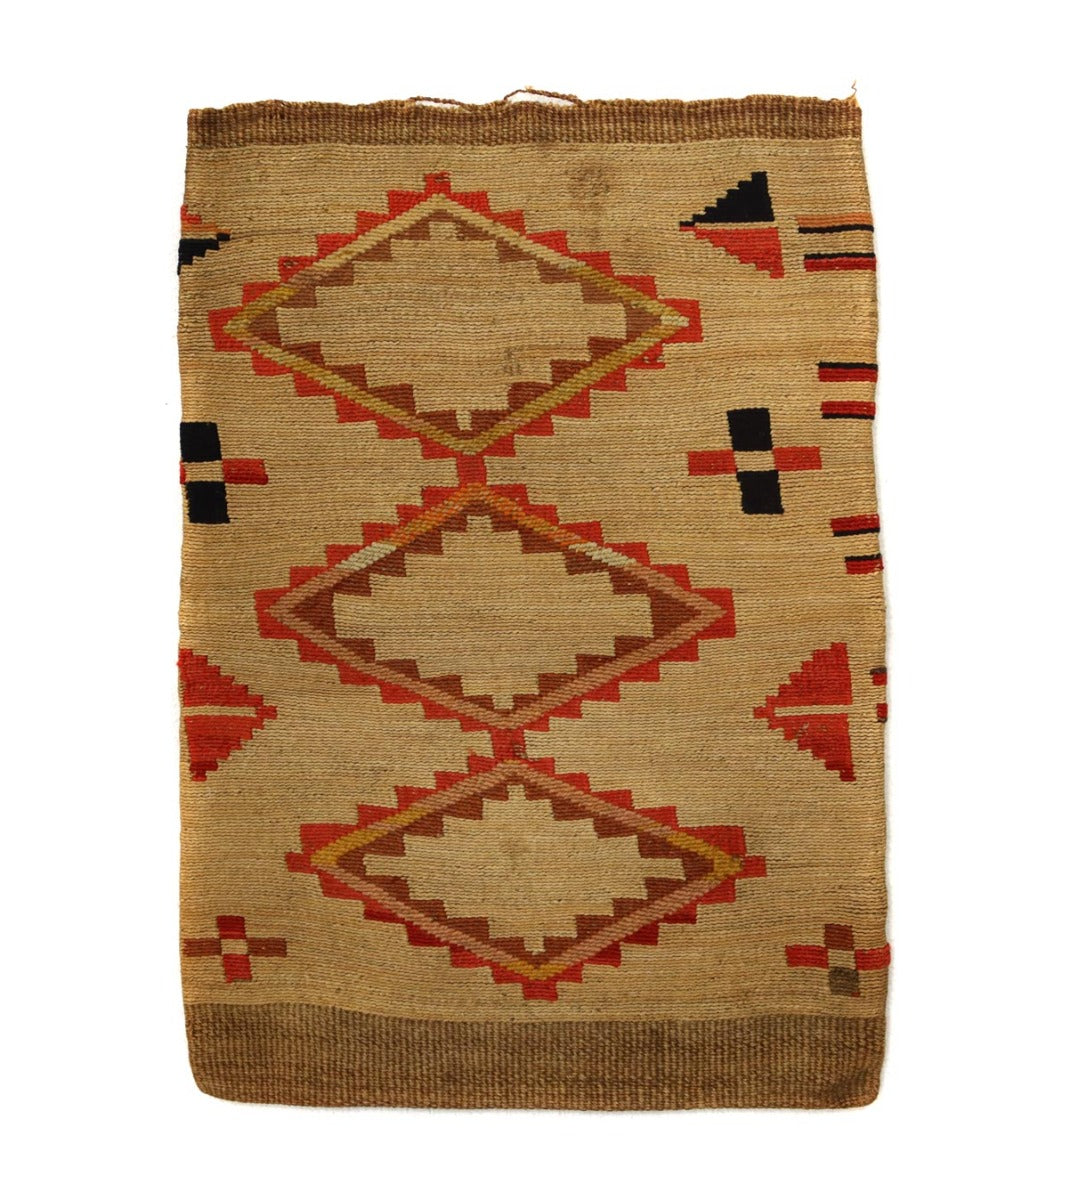 Nez Perce Double-Sided Corn Husk Bag c. 1900s, 19" x 13.25" (SK91963-0222-001) 1
